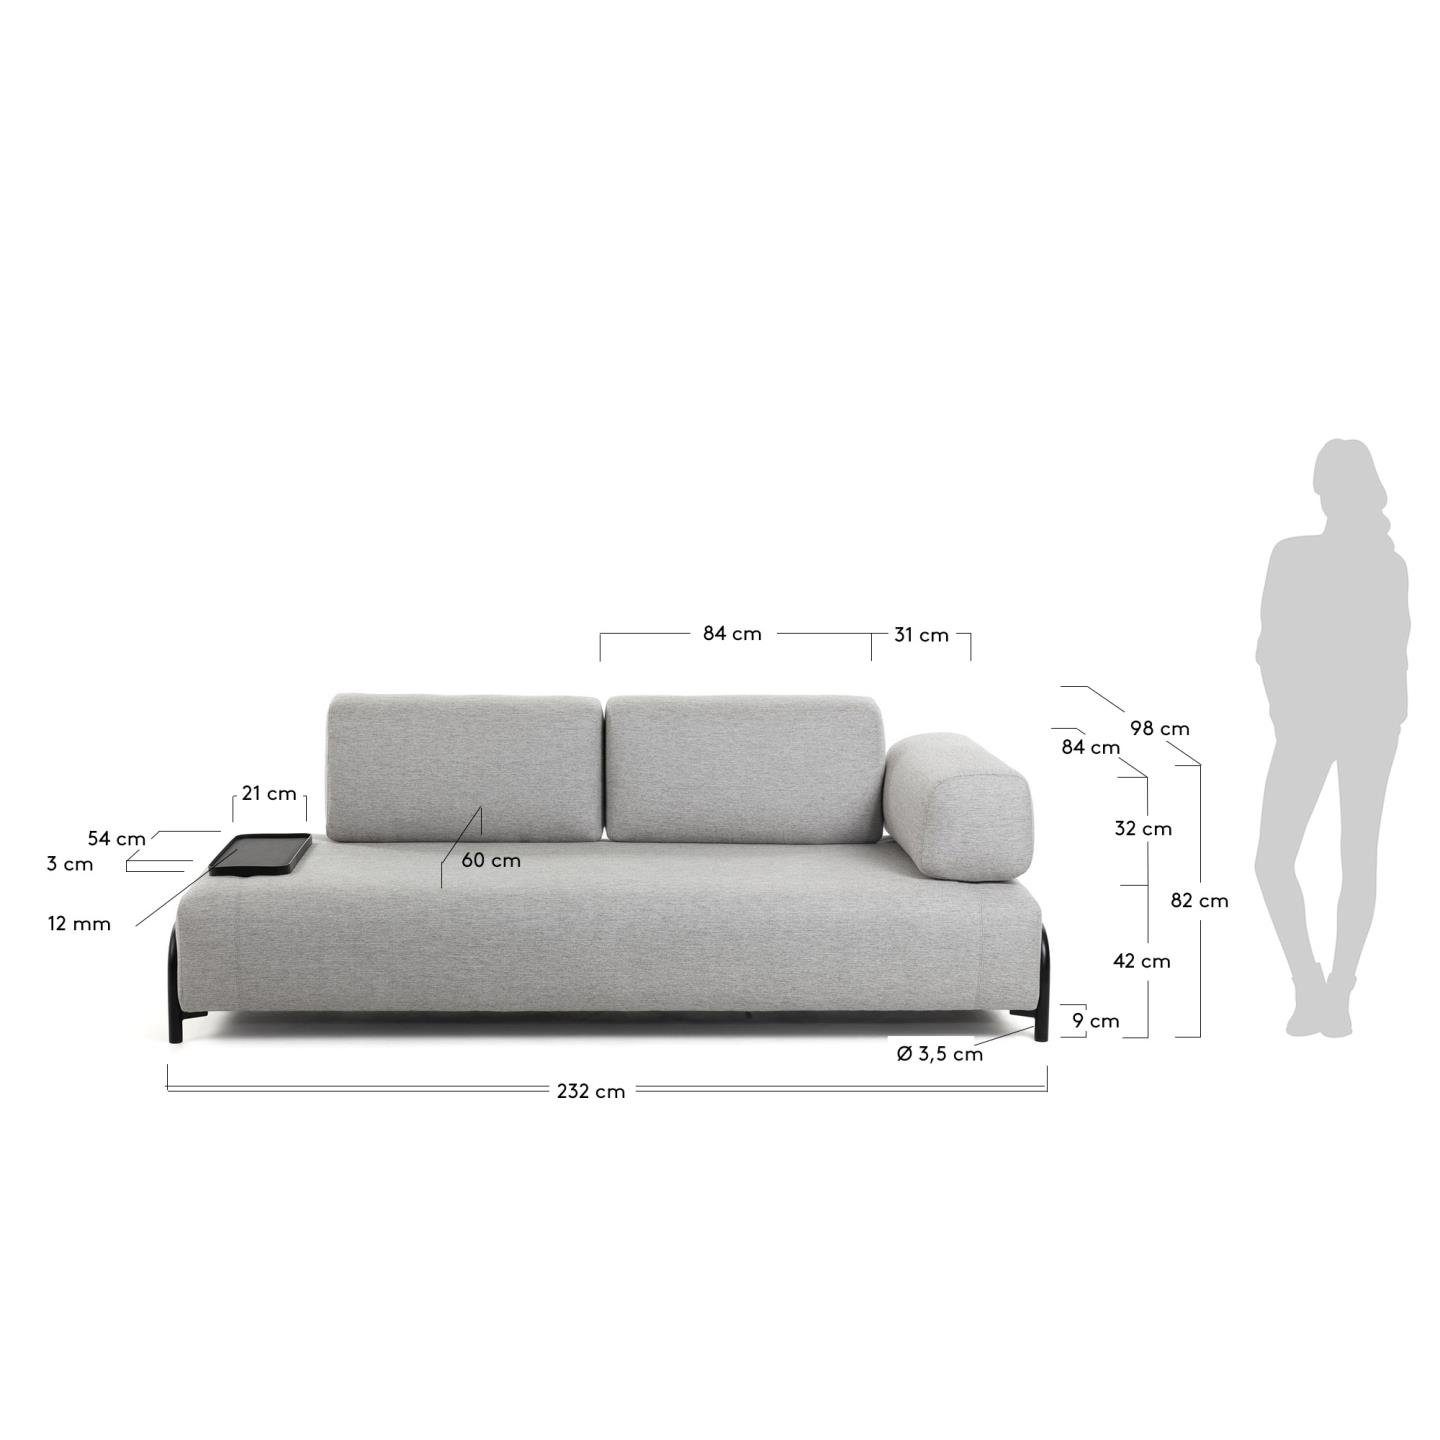 kleinem Sofa Compo Natur24 Sofa Tablett 3-Sitzer hellgrau mit 232cm Couch